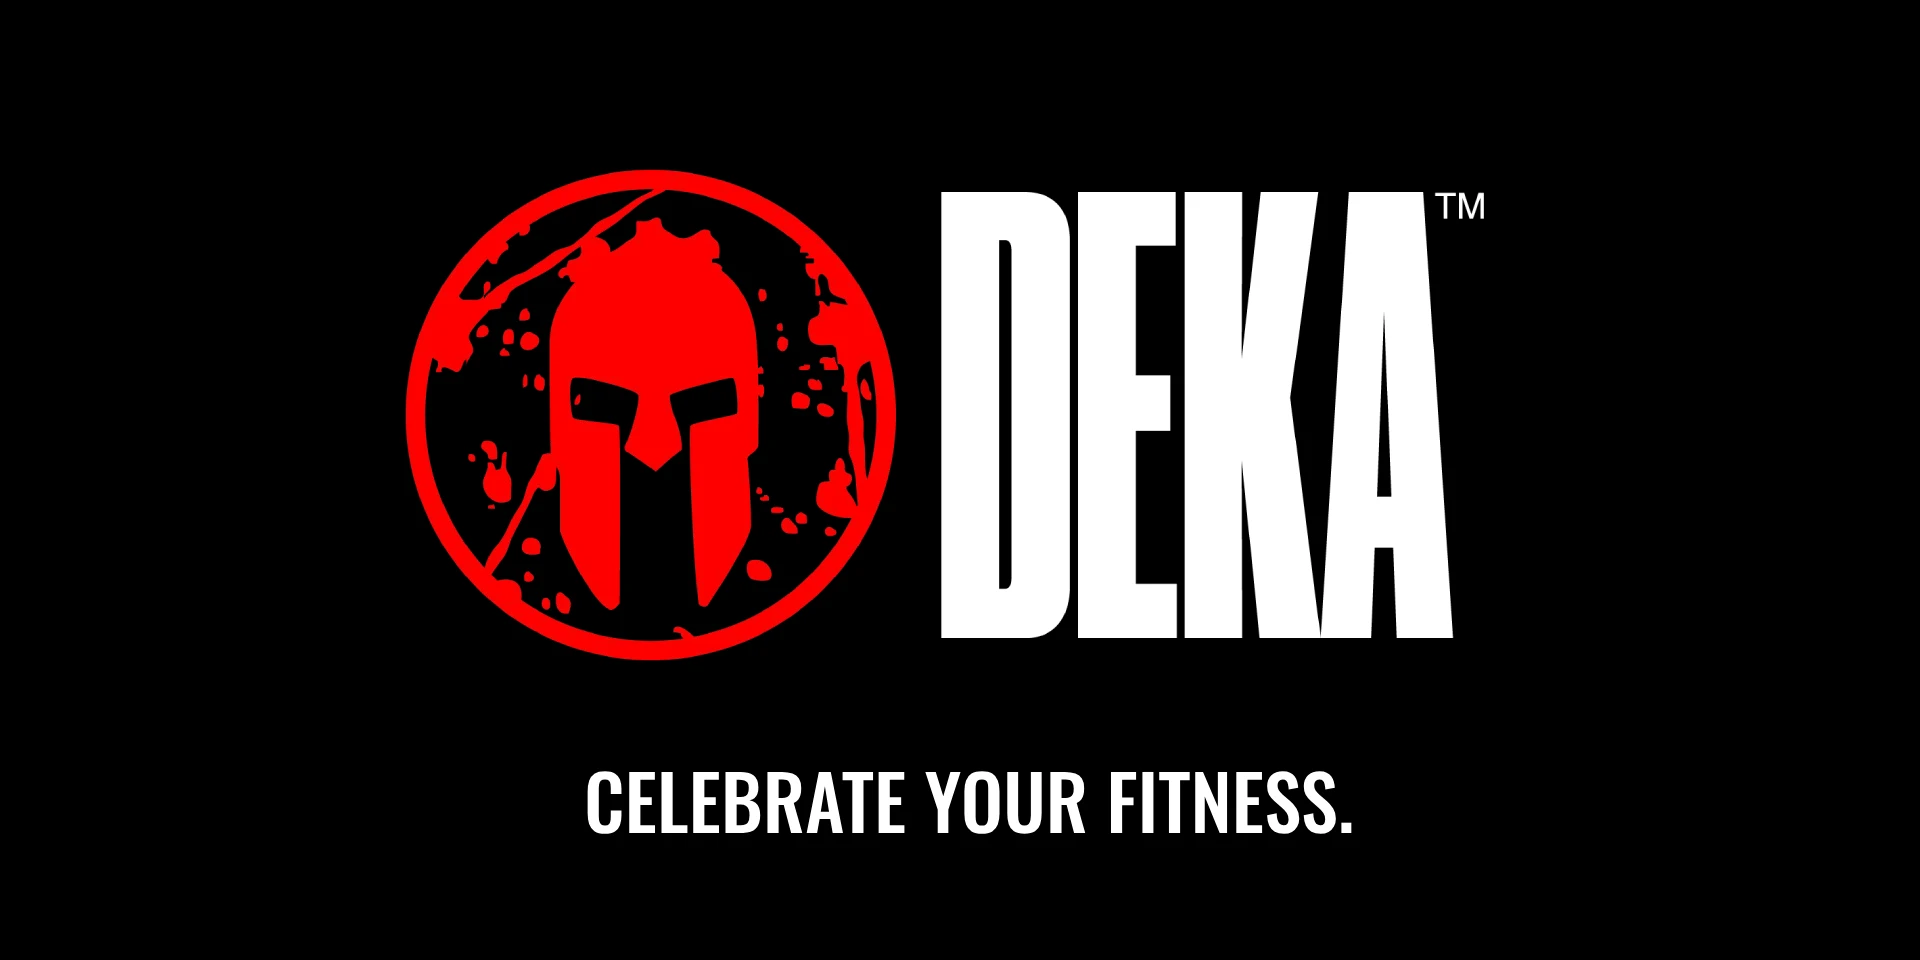 DEKA by Spartan Race logo